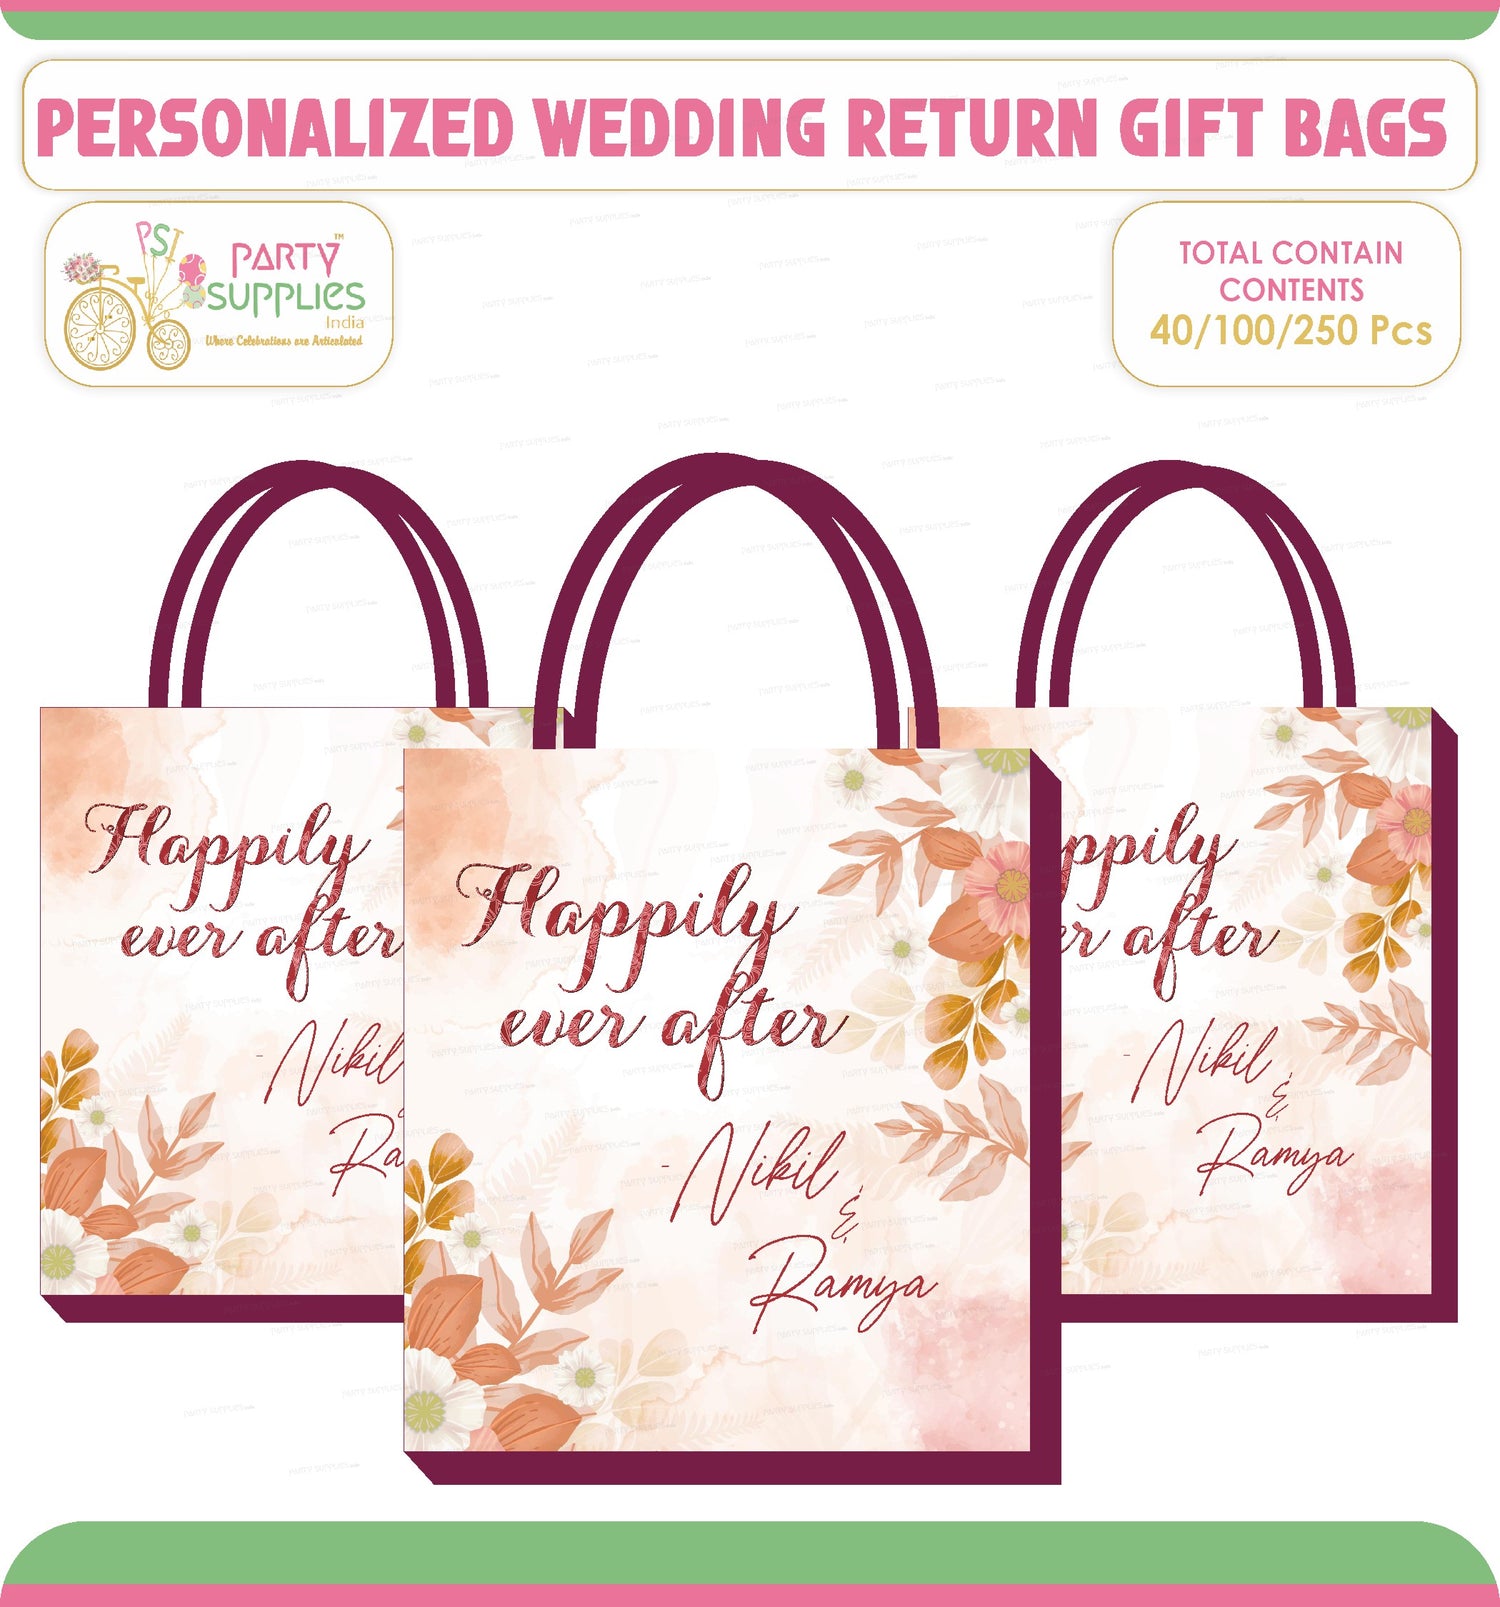 PSI Wedding Theme Customized Return Gift Bag